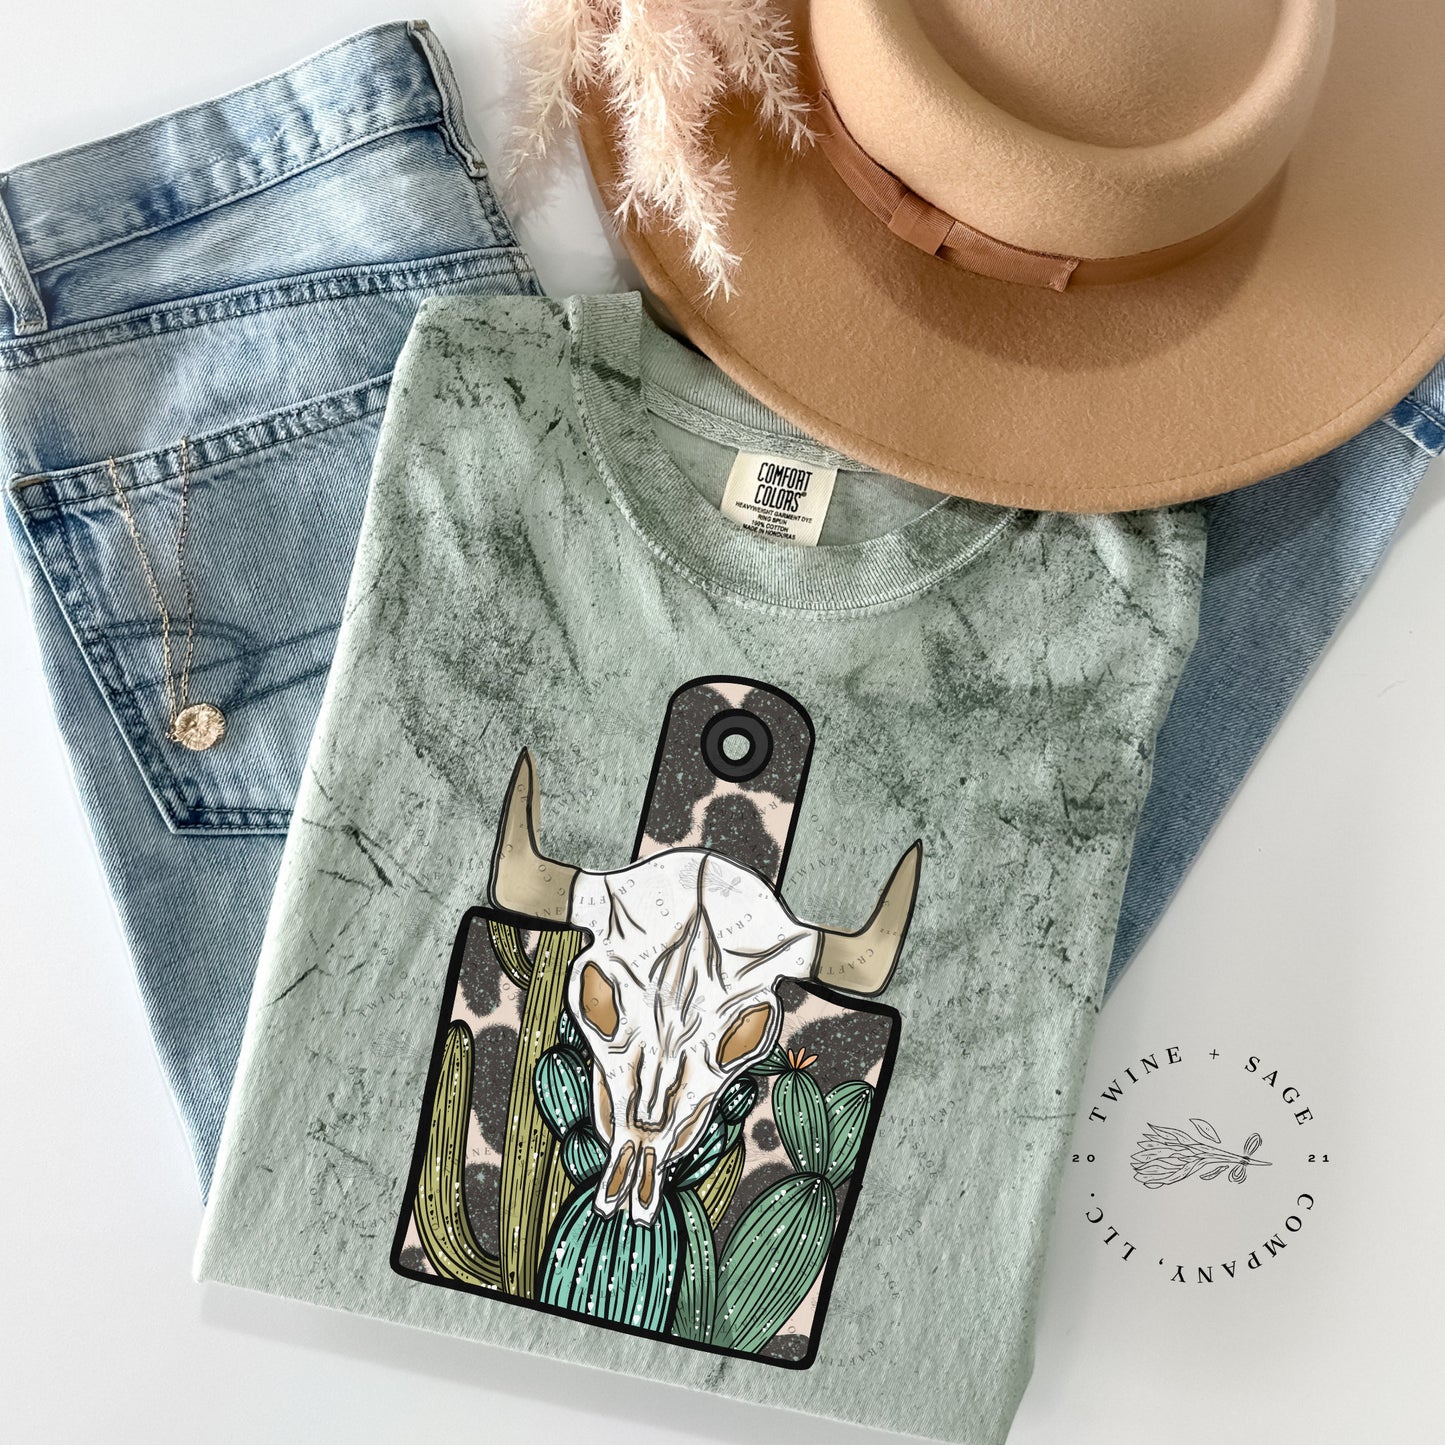 Cow Skull Shirt, Cow Tag Shirt, Western Shirt, Cow Shirt, Graphic Tee Shirt, Comfort Colors Shirt